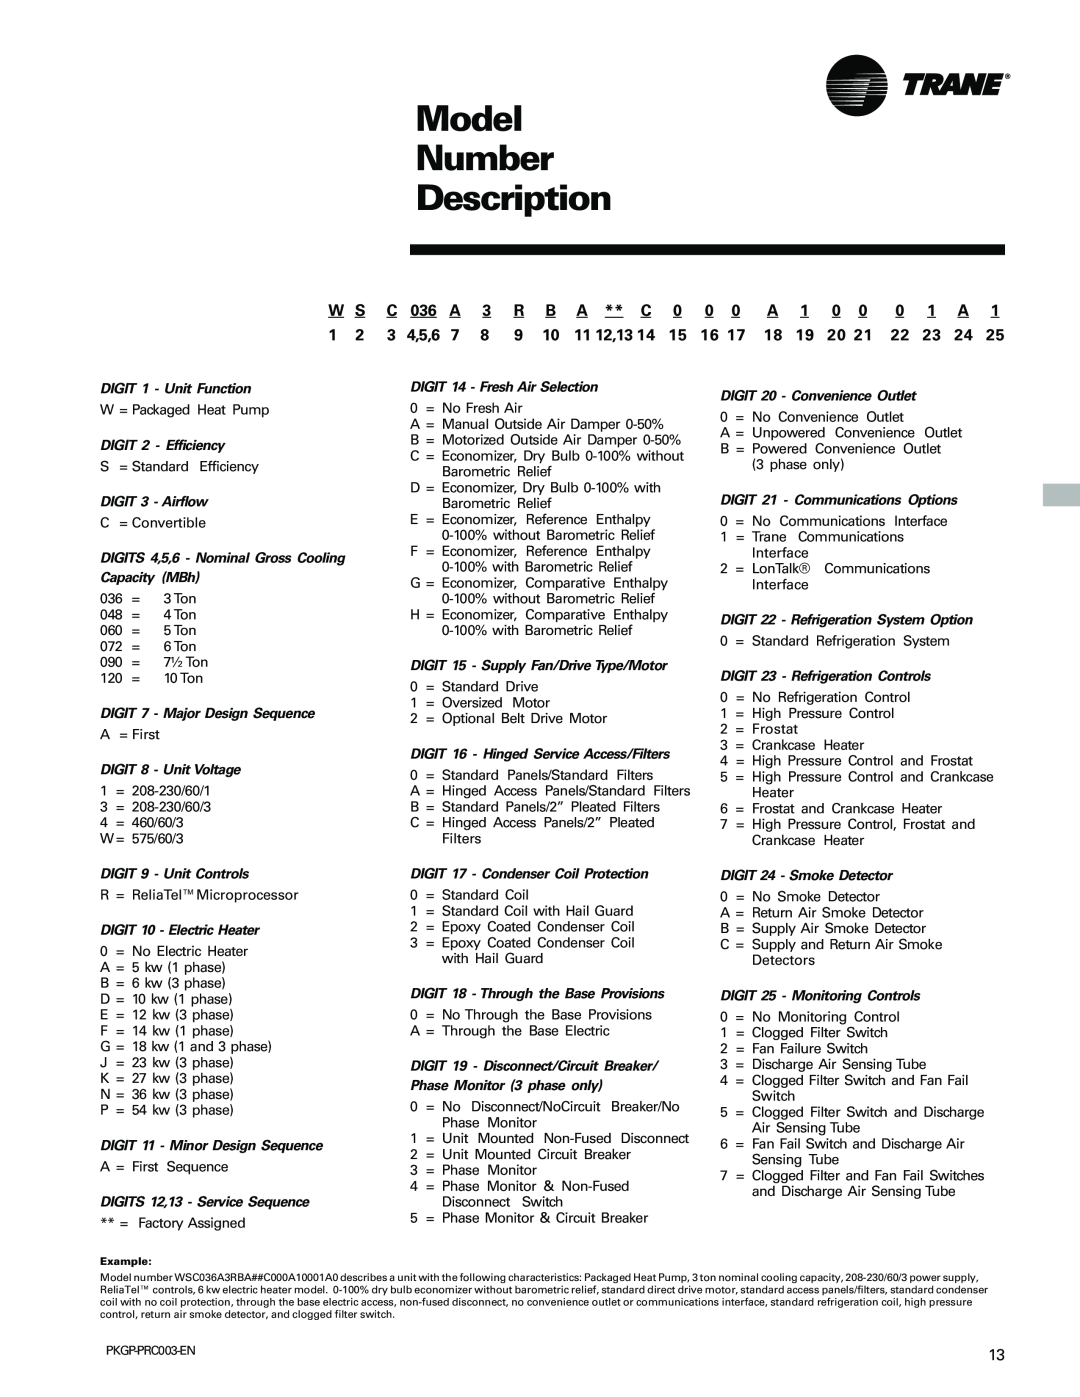 Trane PKGP-PRC003-EN manual Model Number Description 